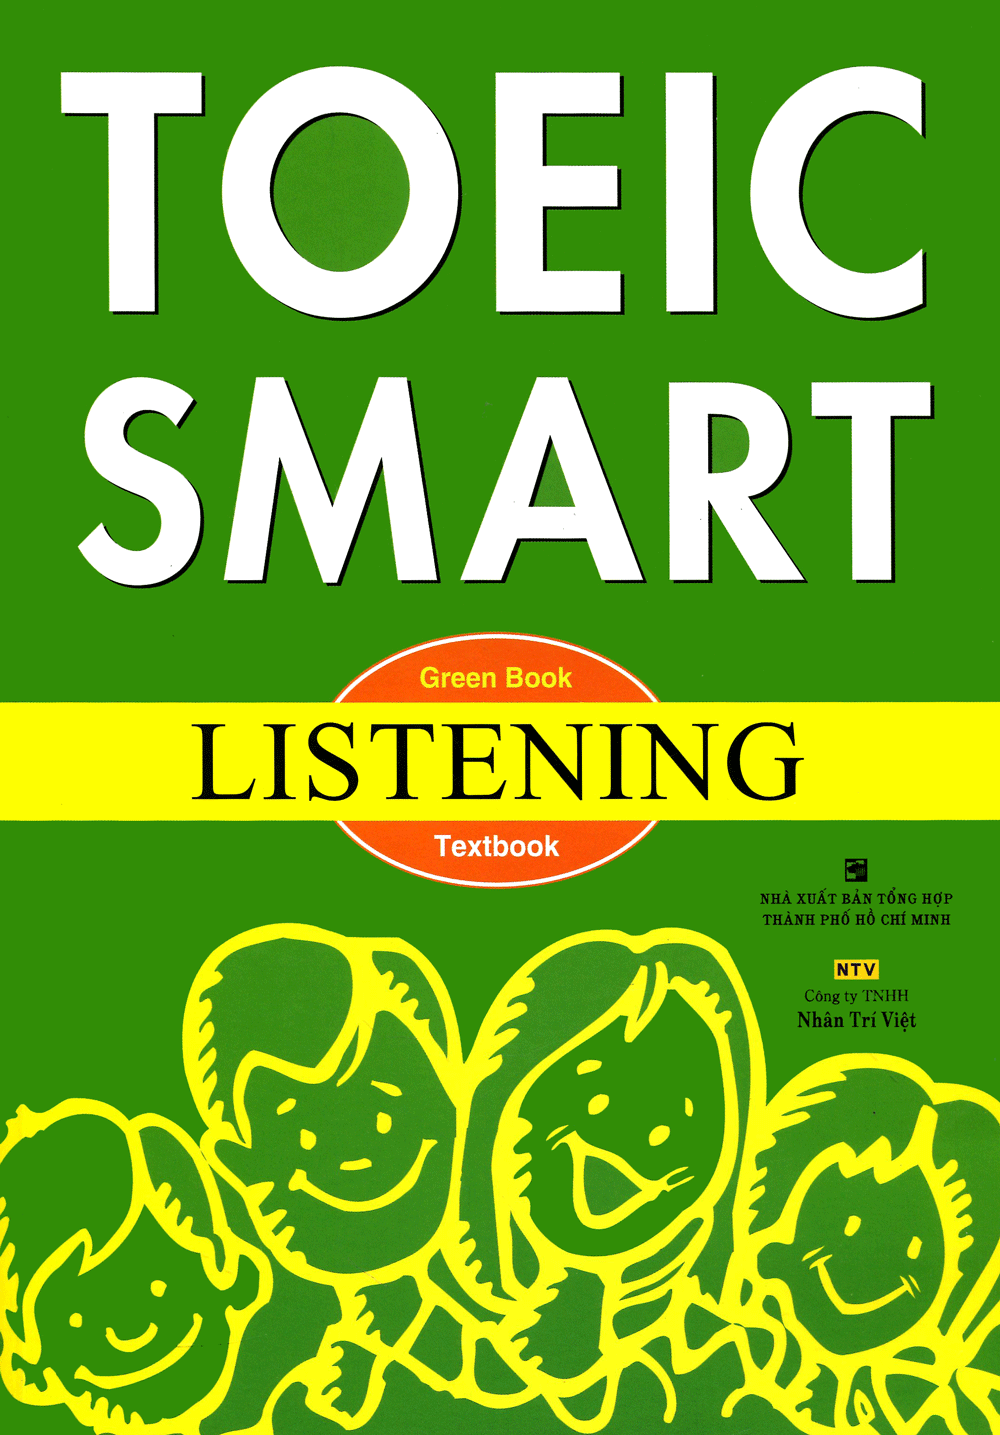 Toeic Smart - Green Book Listening